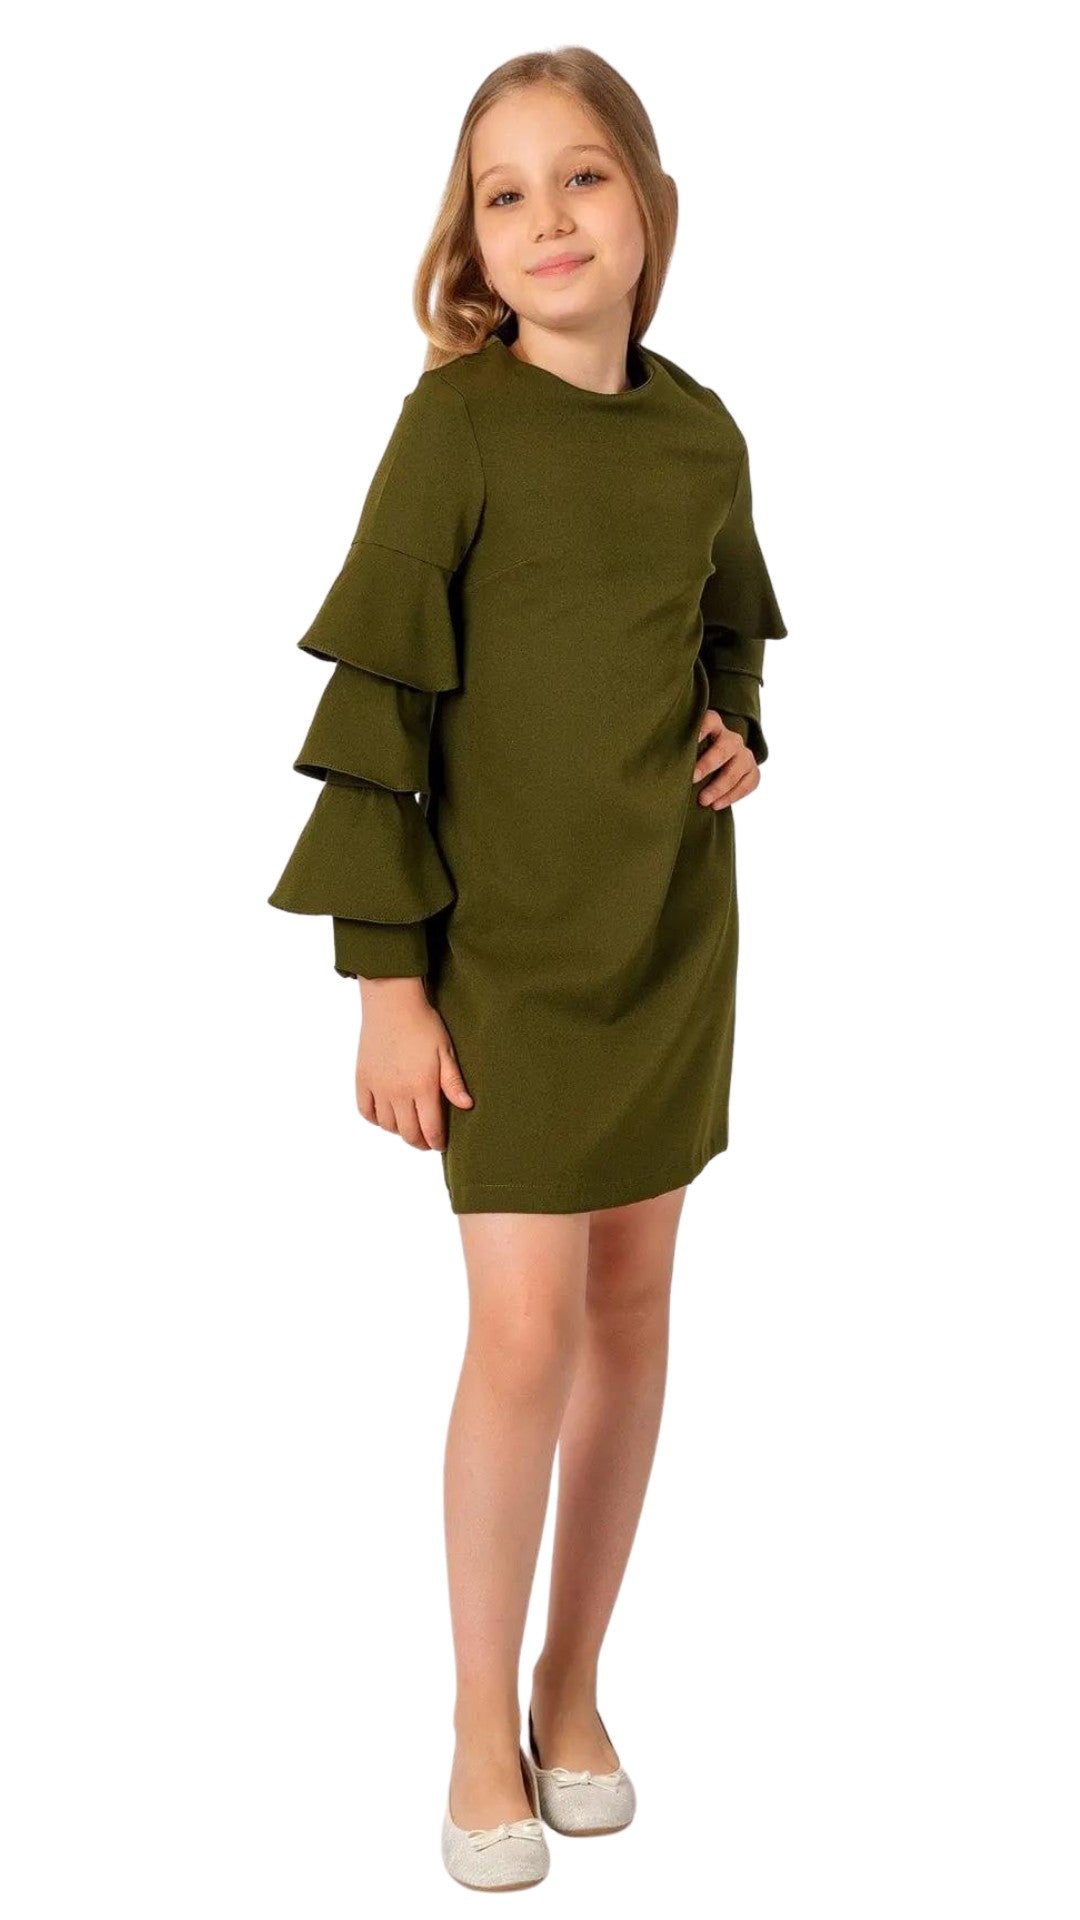 InCity Girls Tween 7-14 Years Green Layered Round Neck Long Layered Sleeve Fashion Savile Dress InCity Boys & Girls